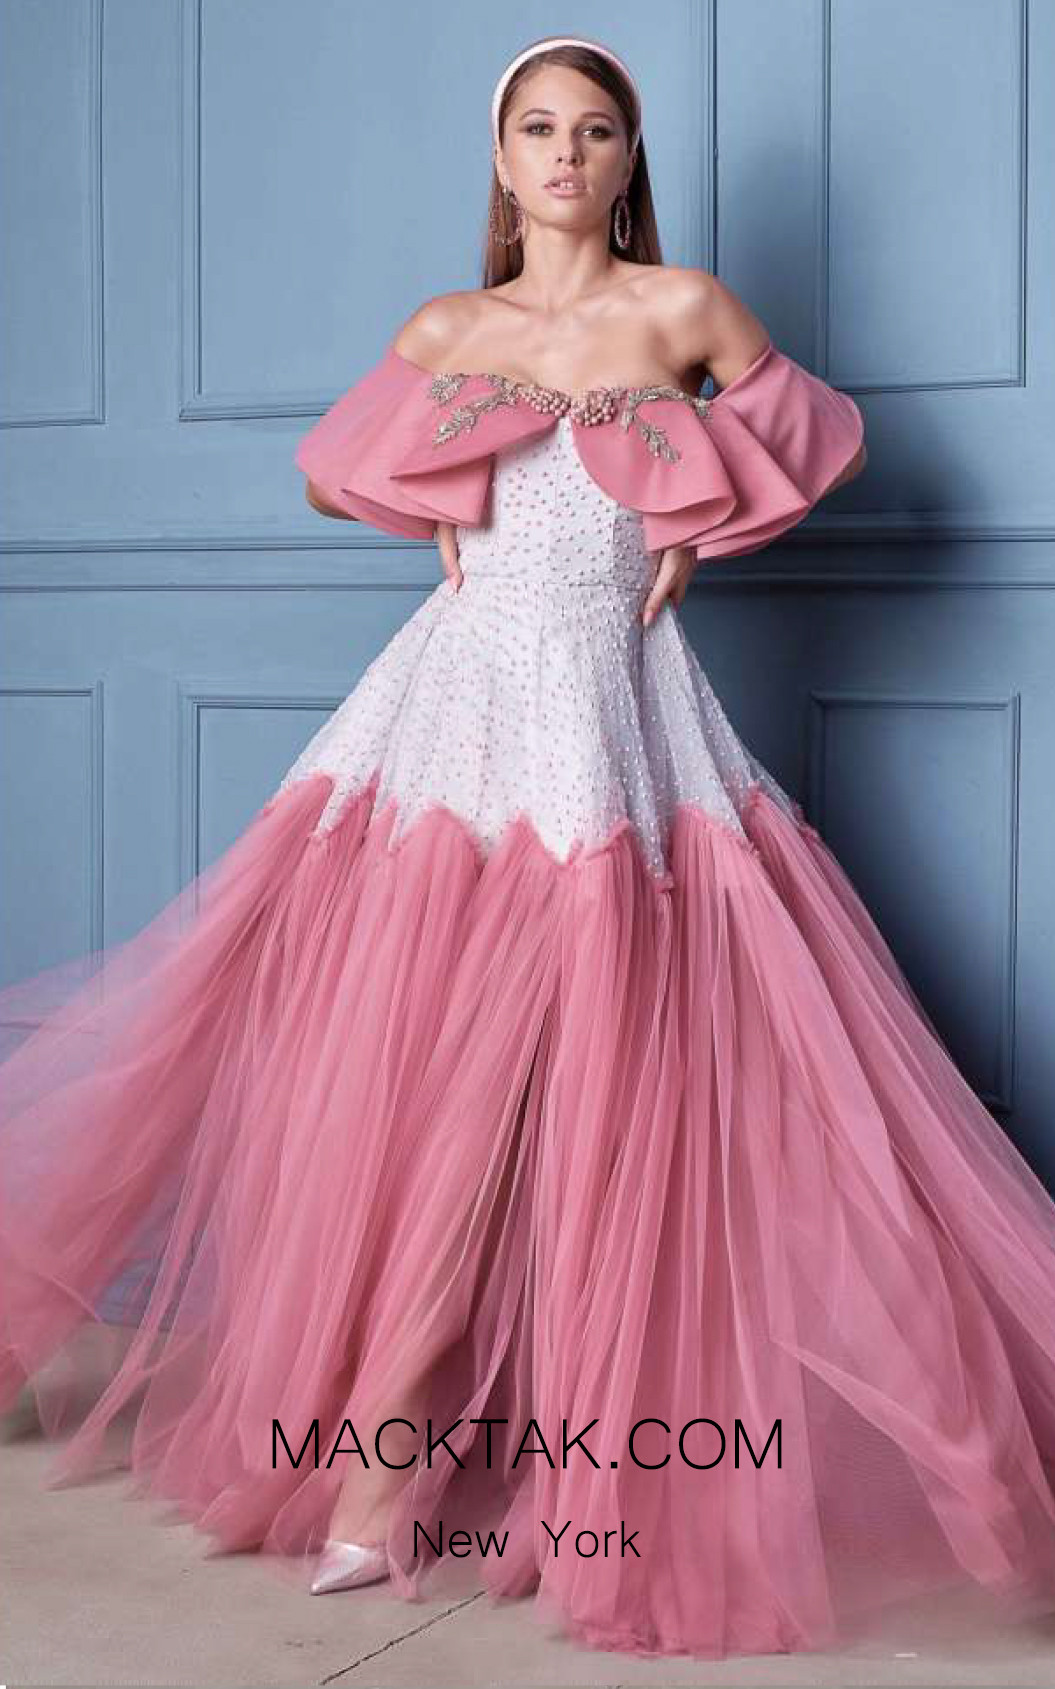 Alda Ciceu NRP SS20-20 Pink White Front Dress